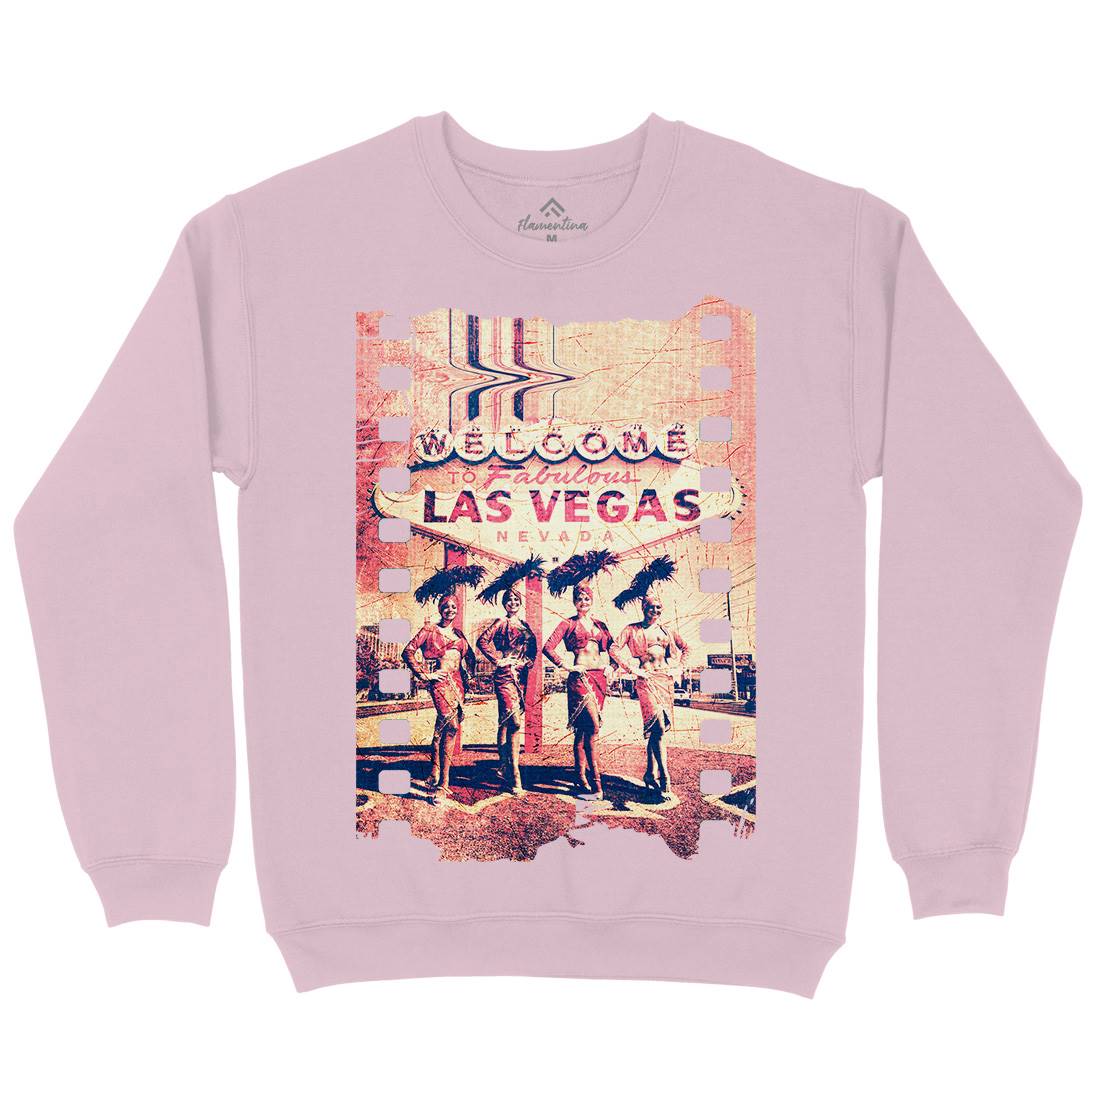 Fabulous Vegas Kids Crew Neck Sweatshirt Art A834